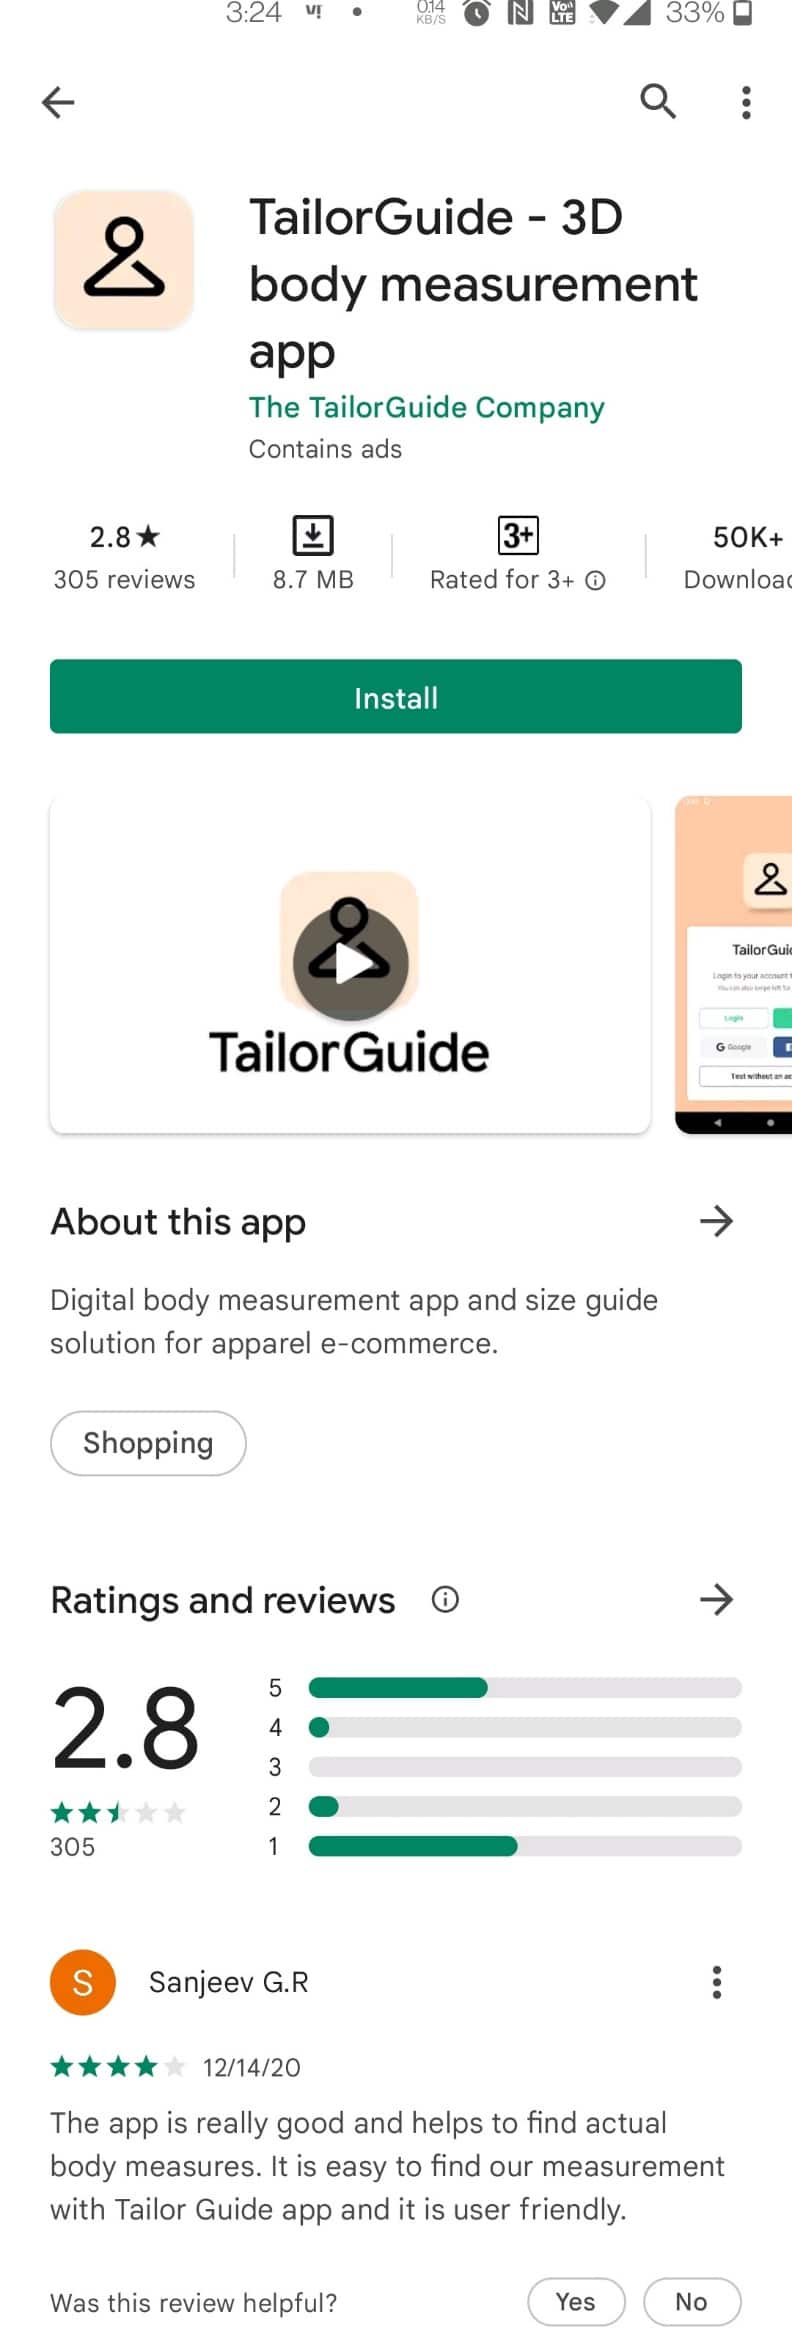 TailorGuide 3D Body Measurement App